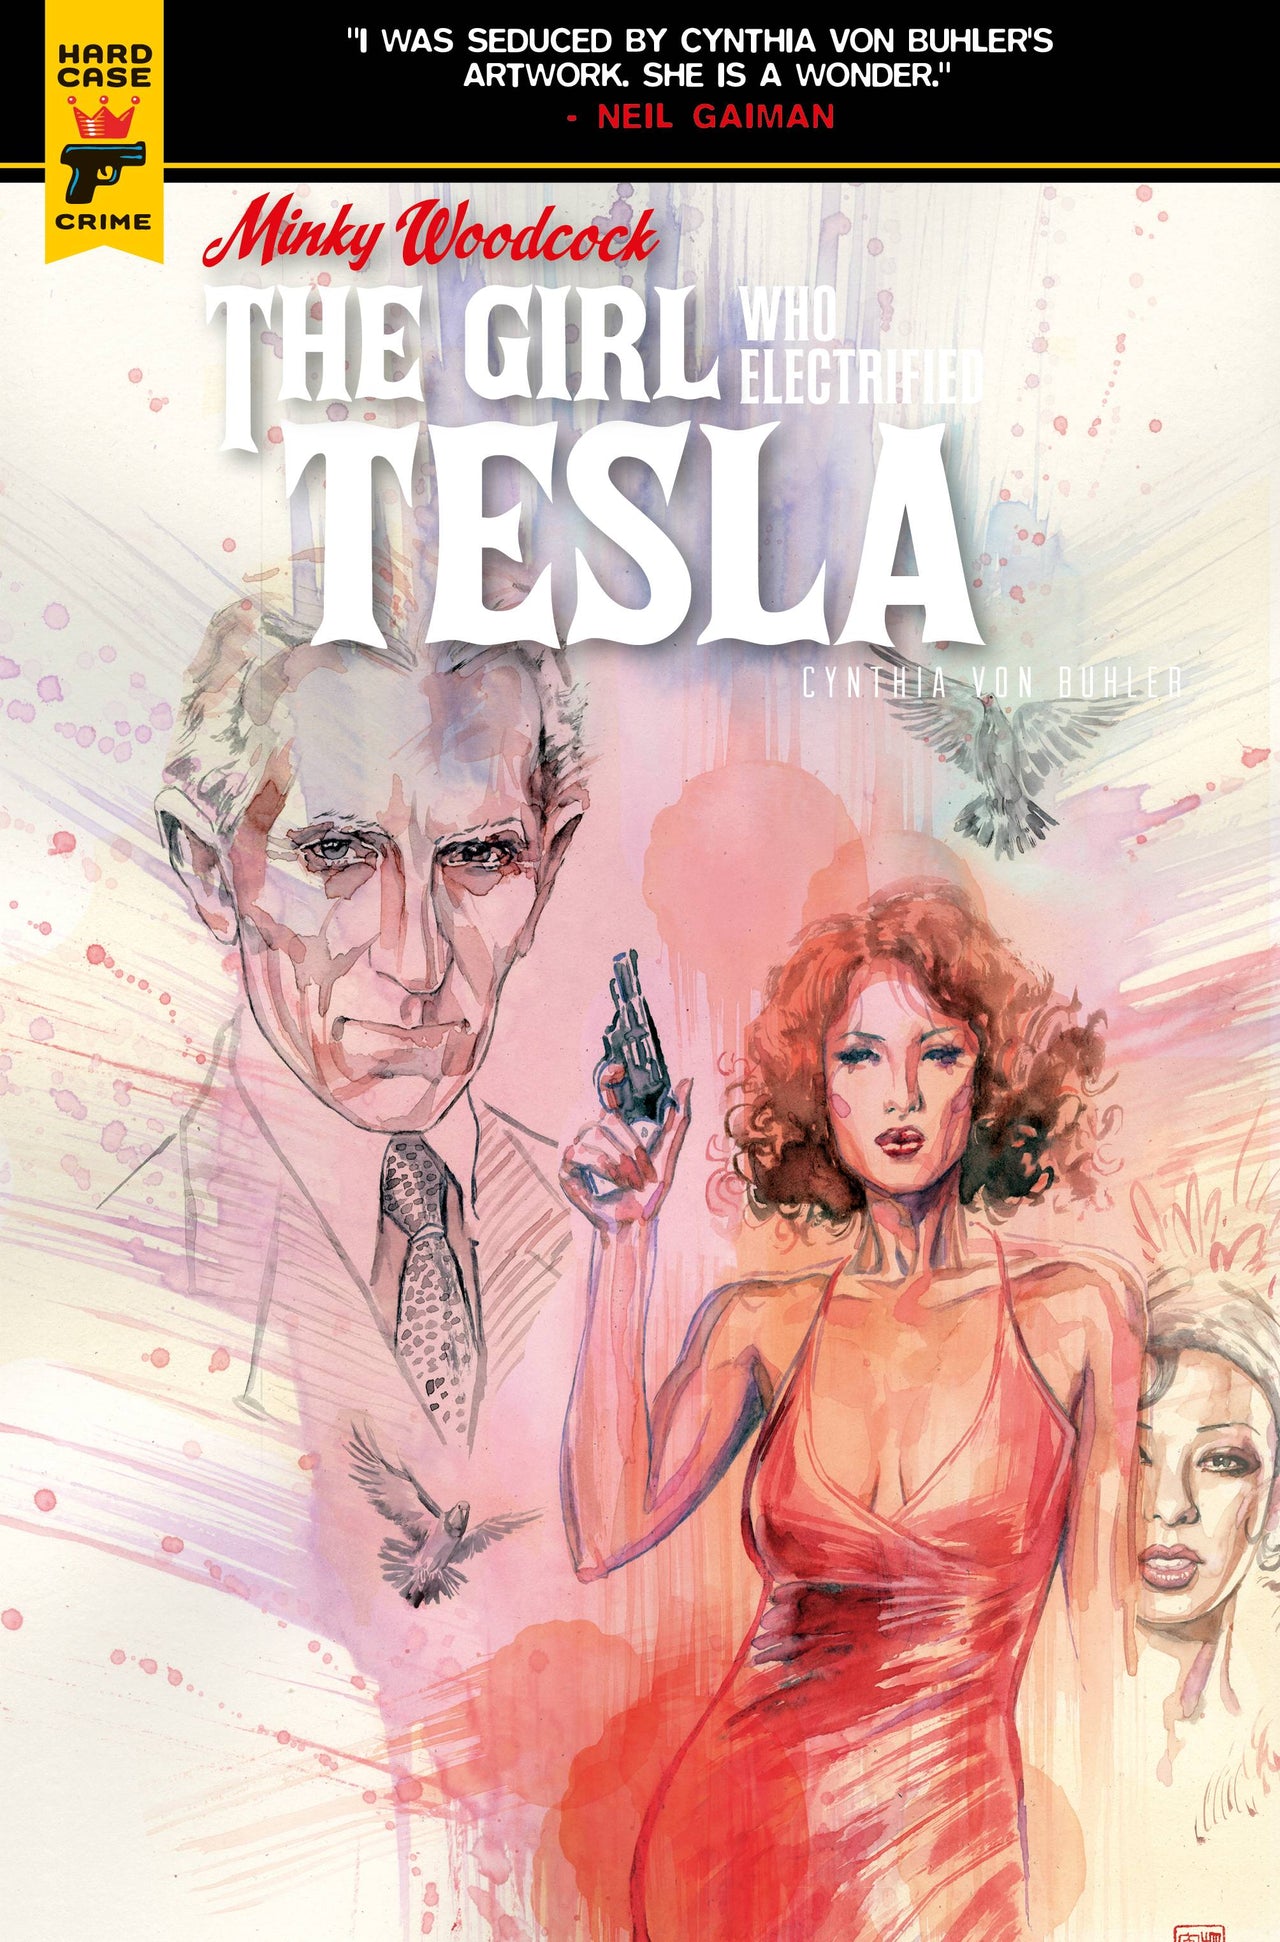 Minky Woodcock: The Girl Who Electrified Tesla Vol. 1 #3